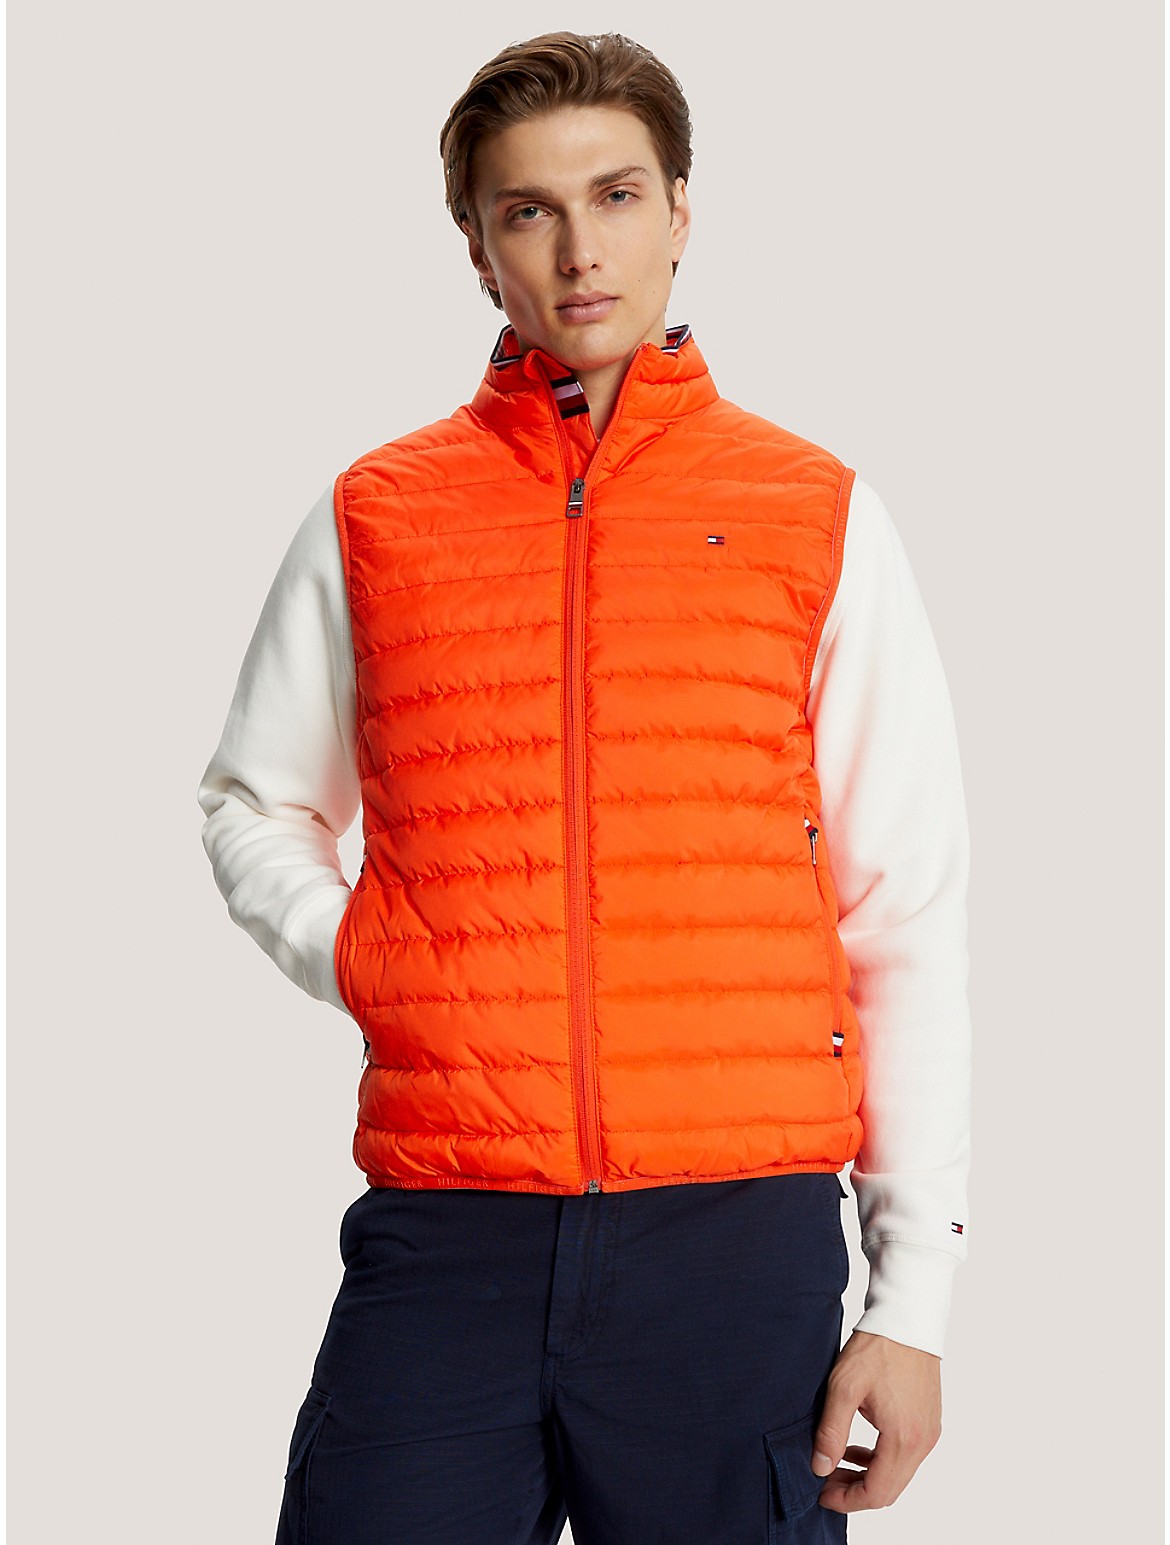 Tommy Hilfiger Men's Recycled Packable Vest - Orange - XXL